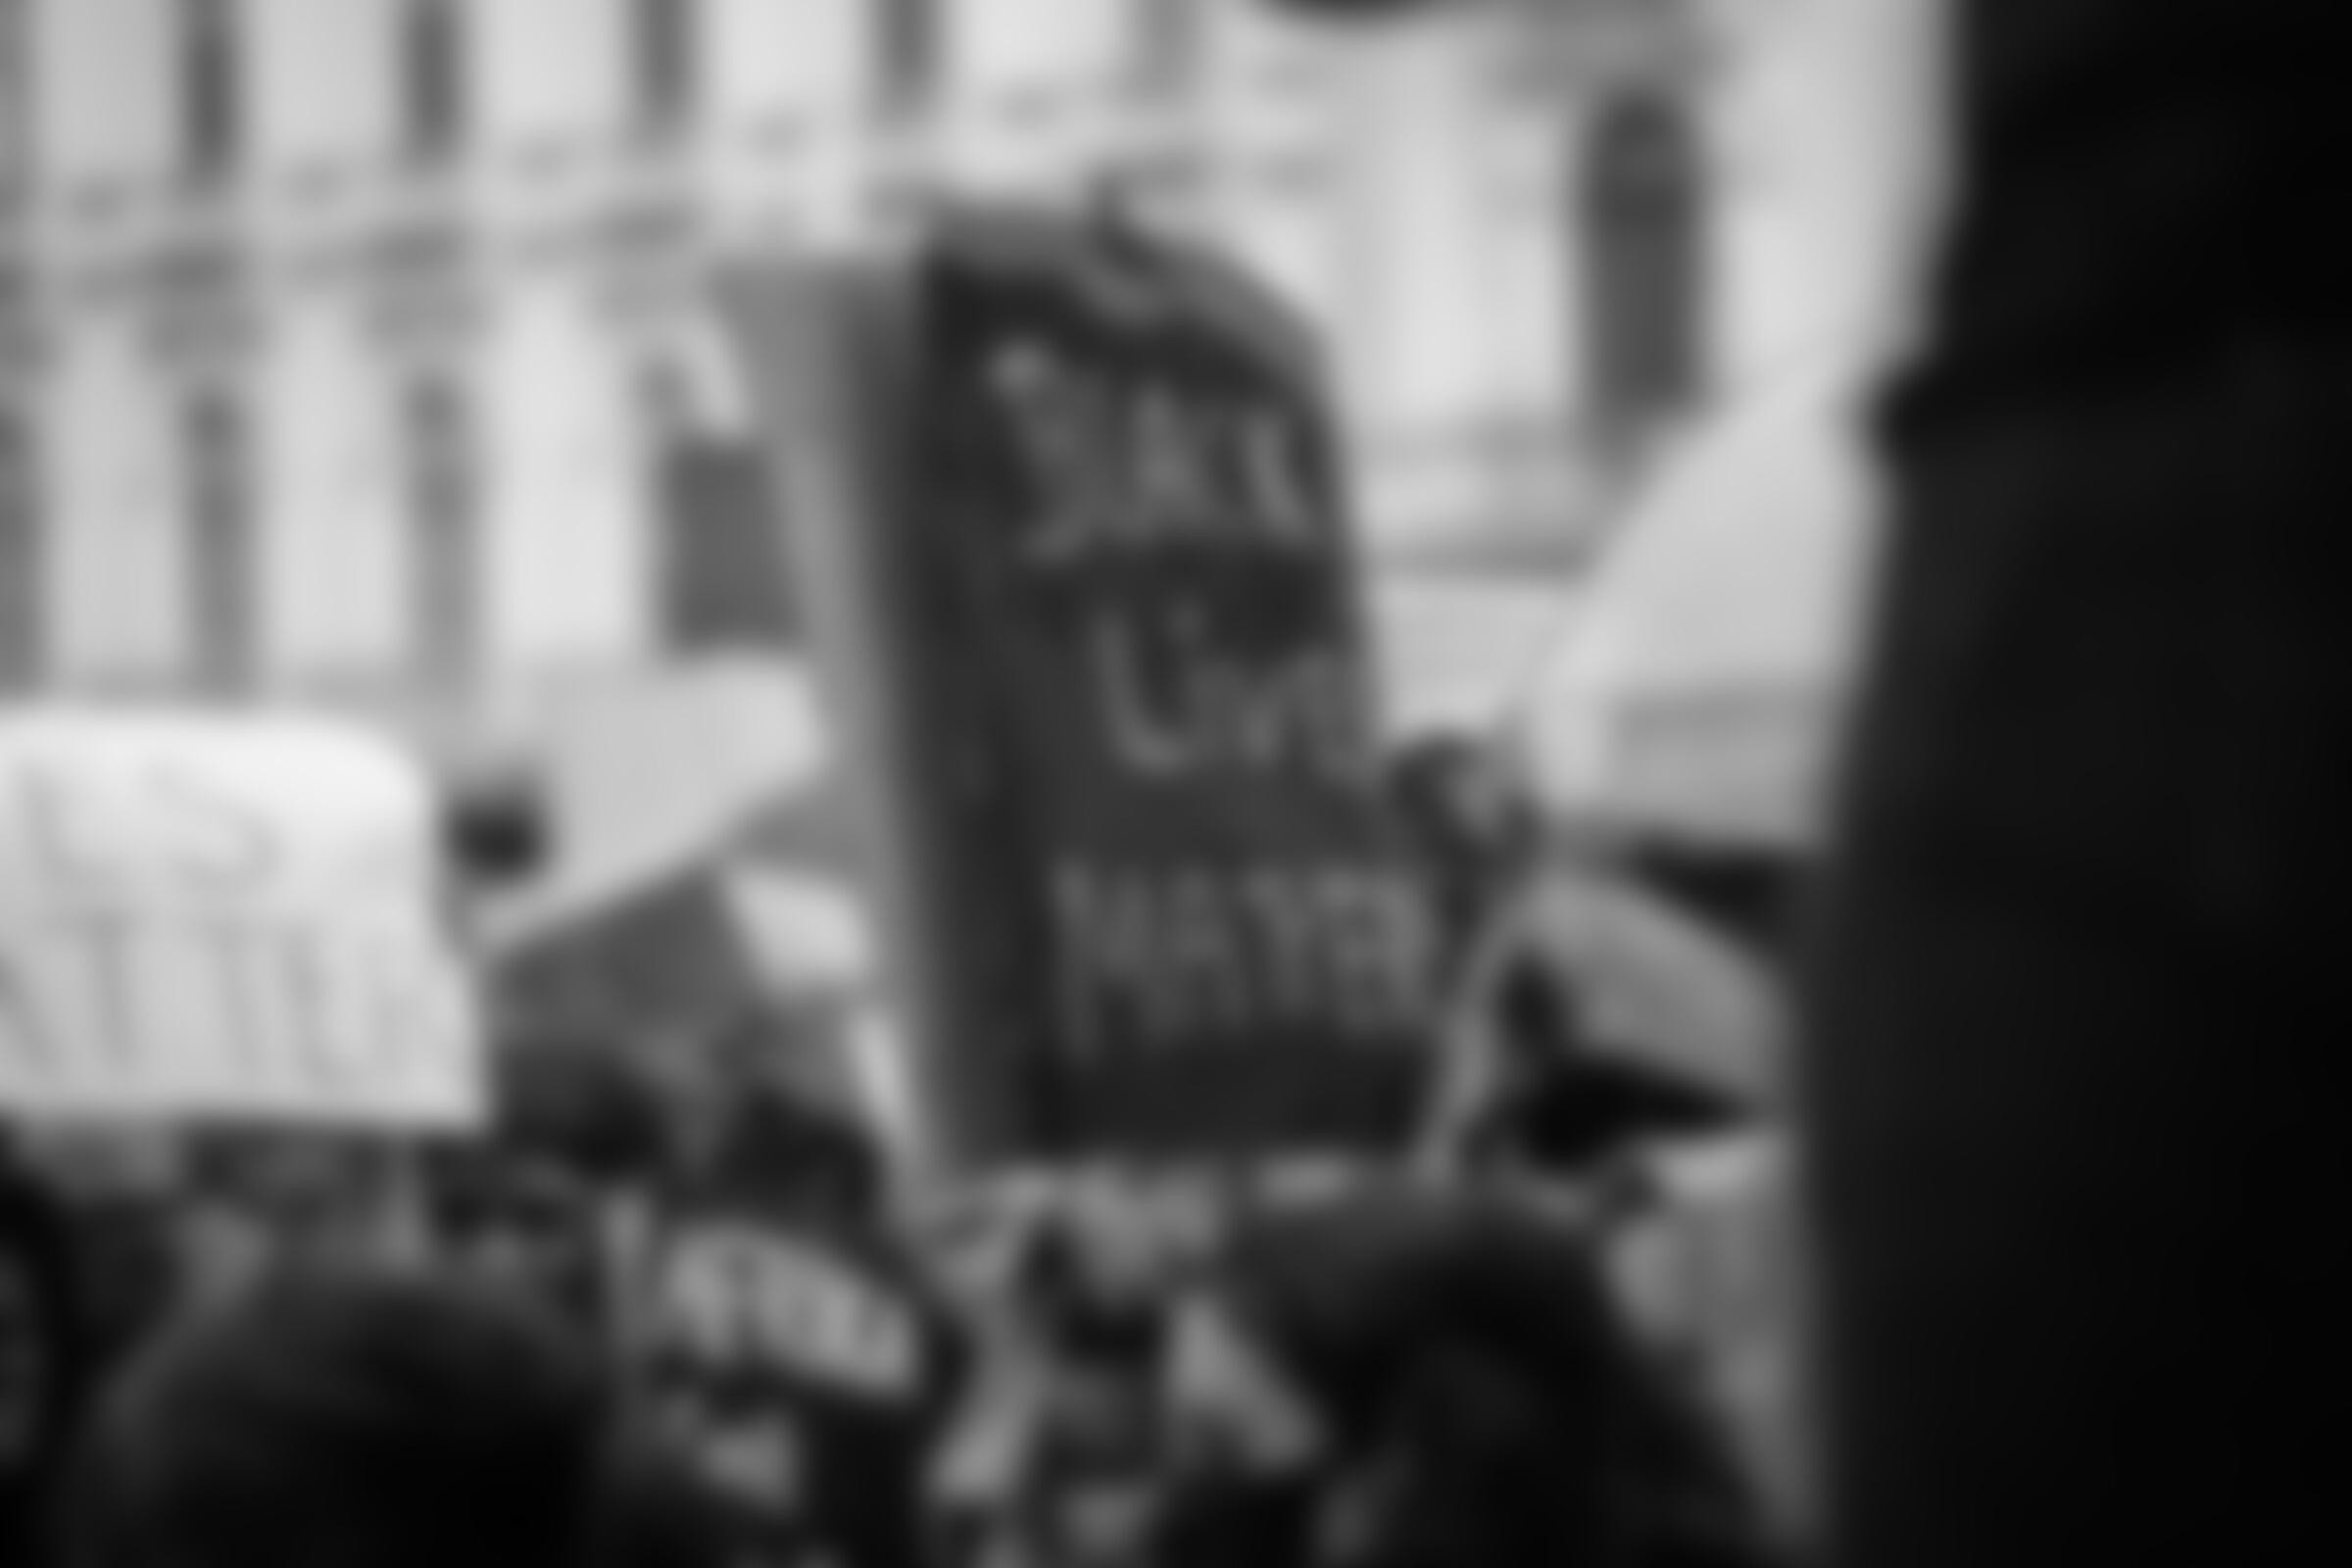 Unrecognizable activists with Black Lives Matter title on placard